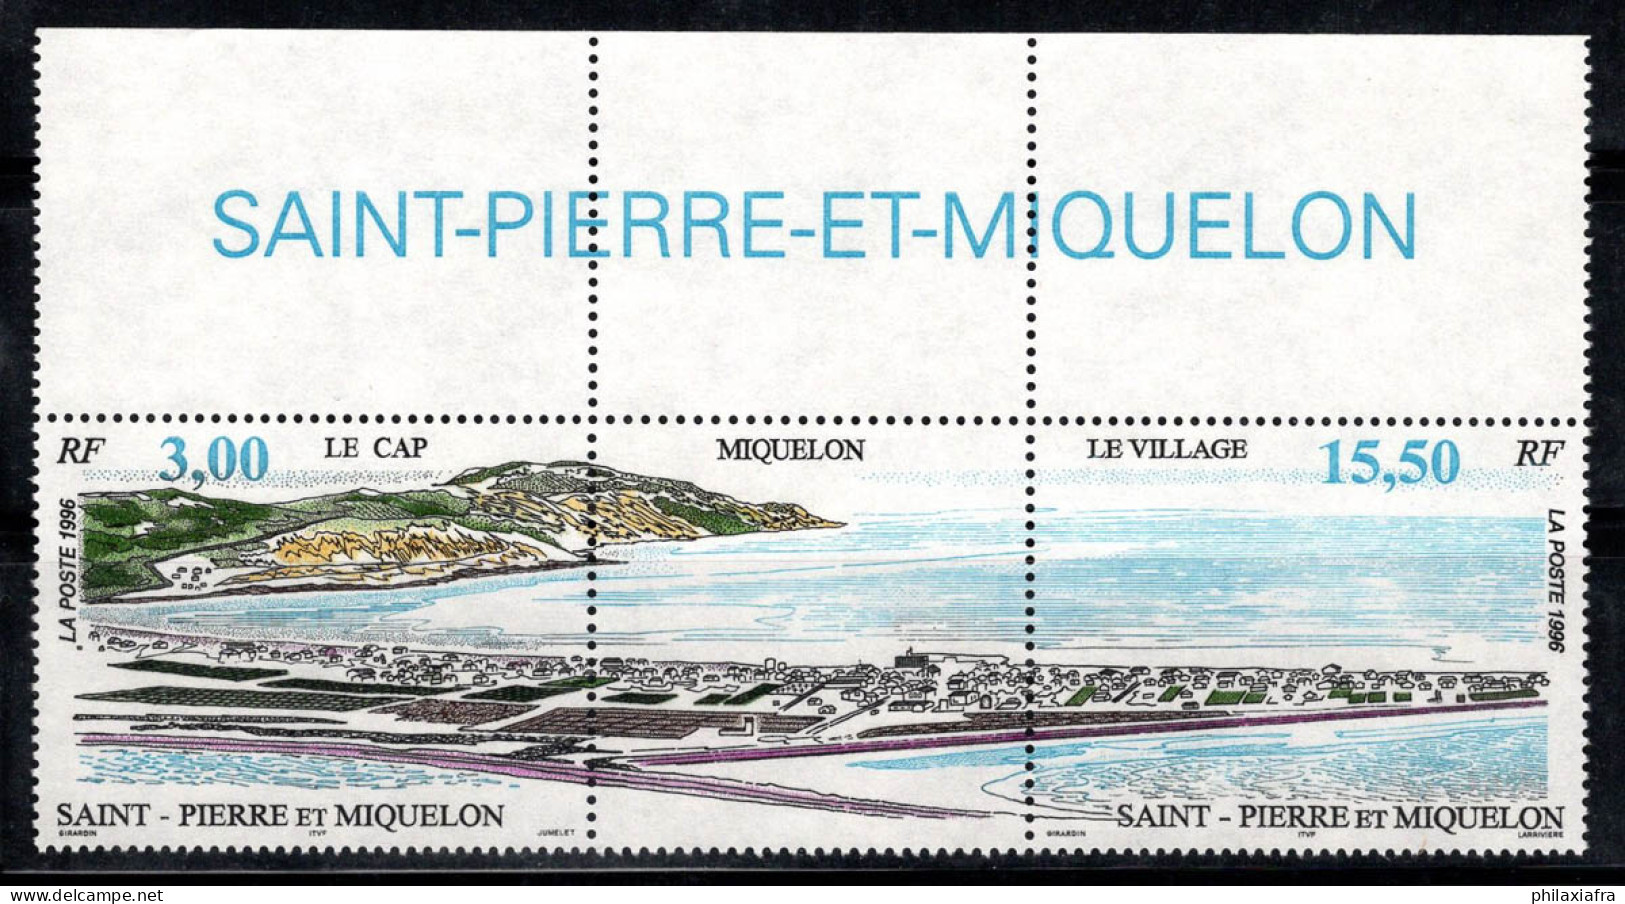 Saint-Pierre-et-Miquelon 1996 Yv. 640A Neuf ** 100% PAYSAGE - Ongebruikt